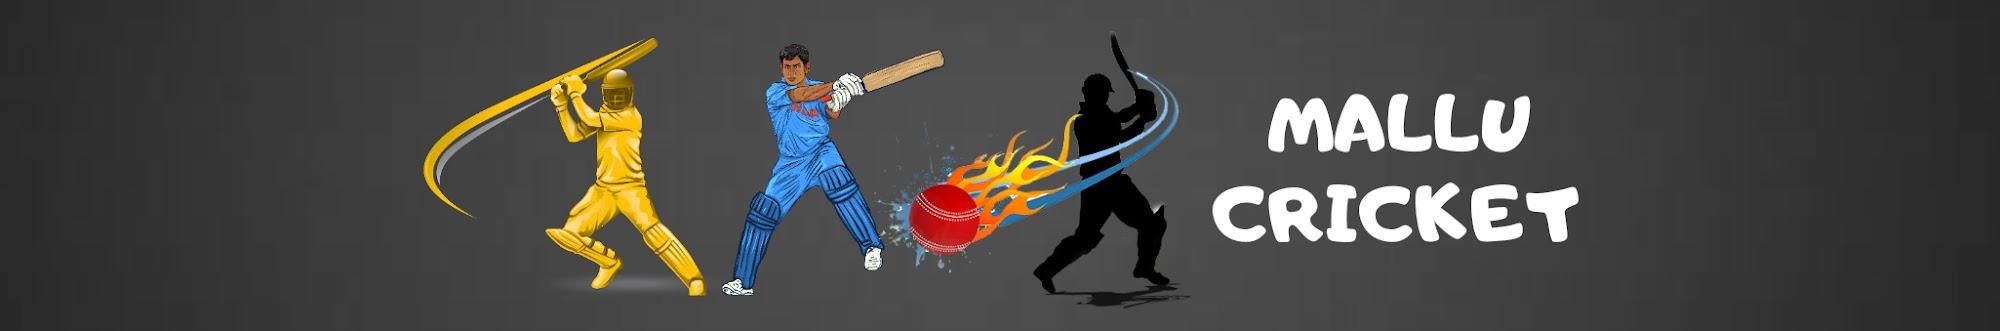 Mallu Cricket